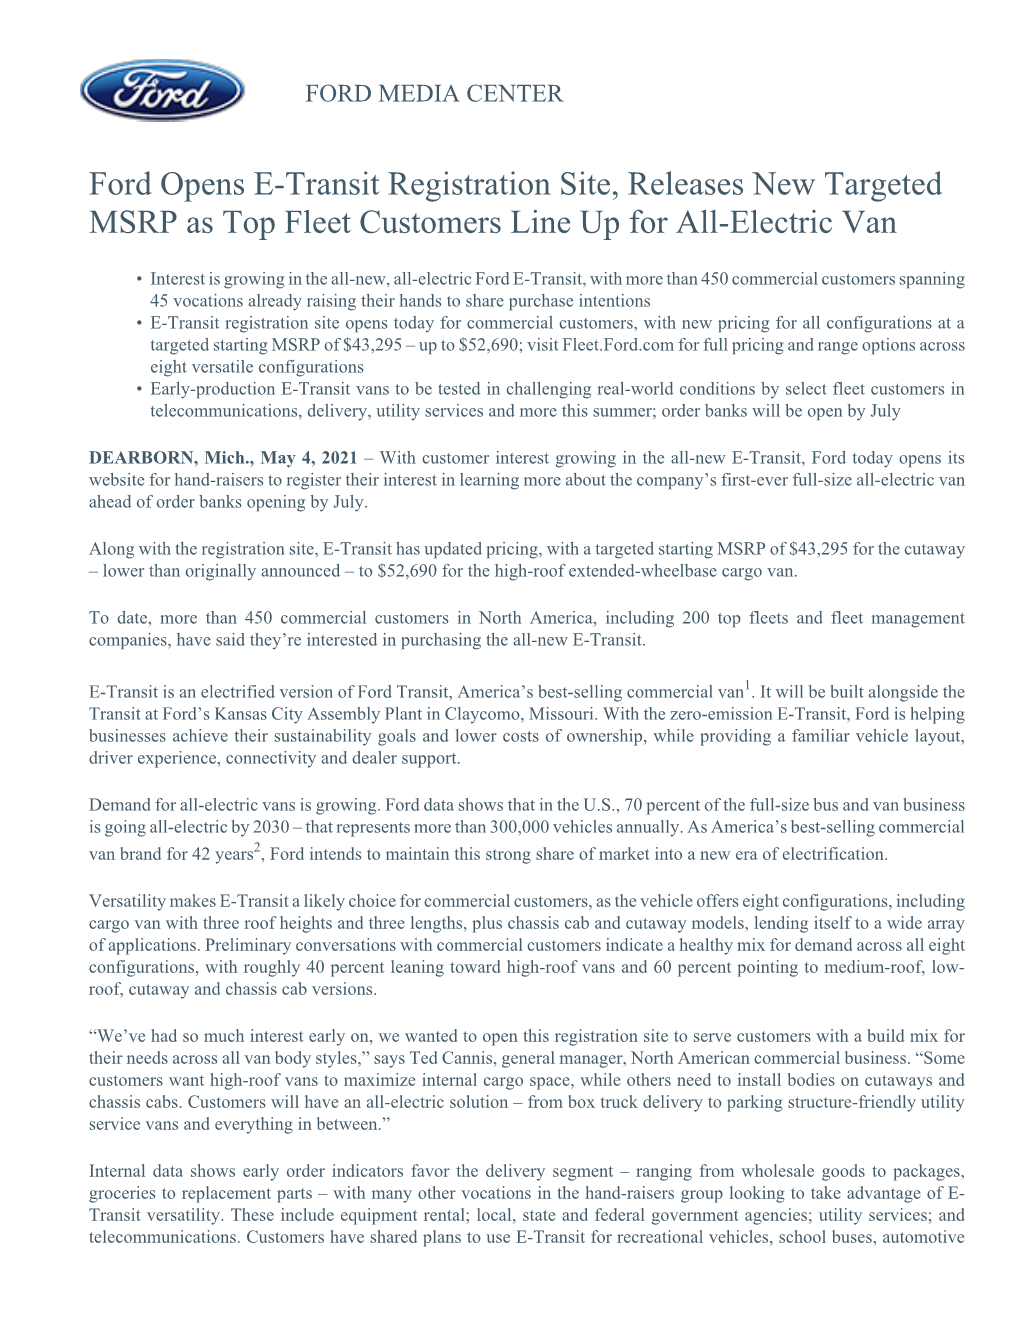 Ford Fleet 2022 E-Transit News